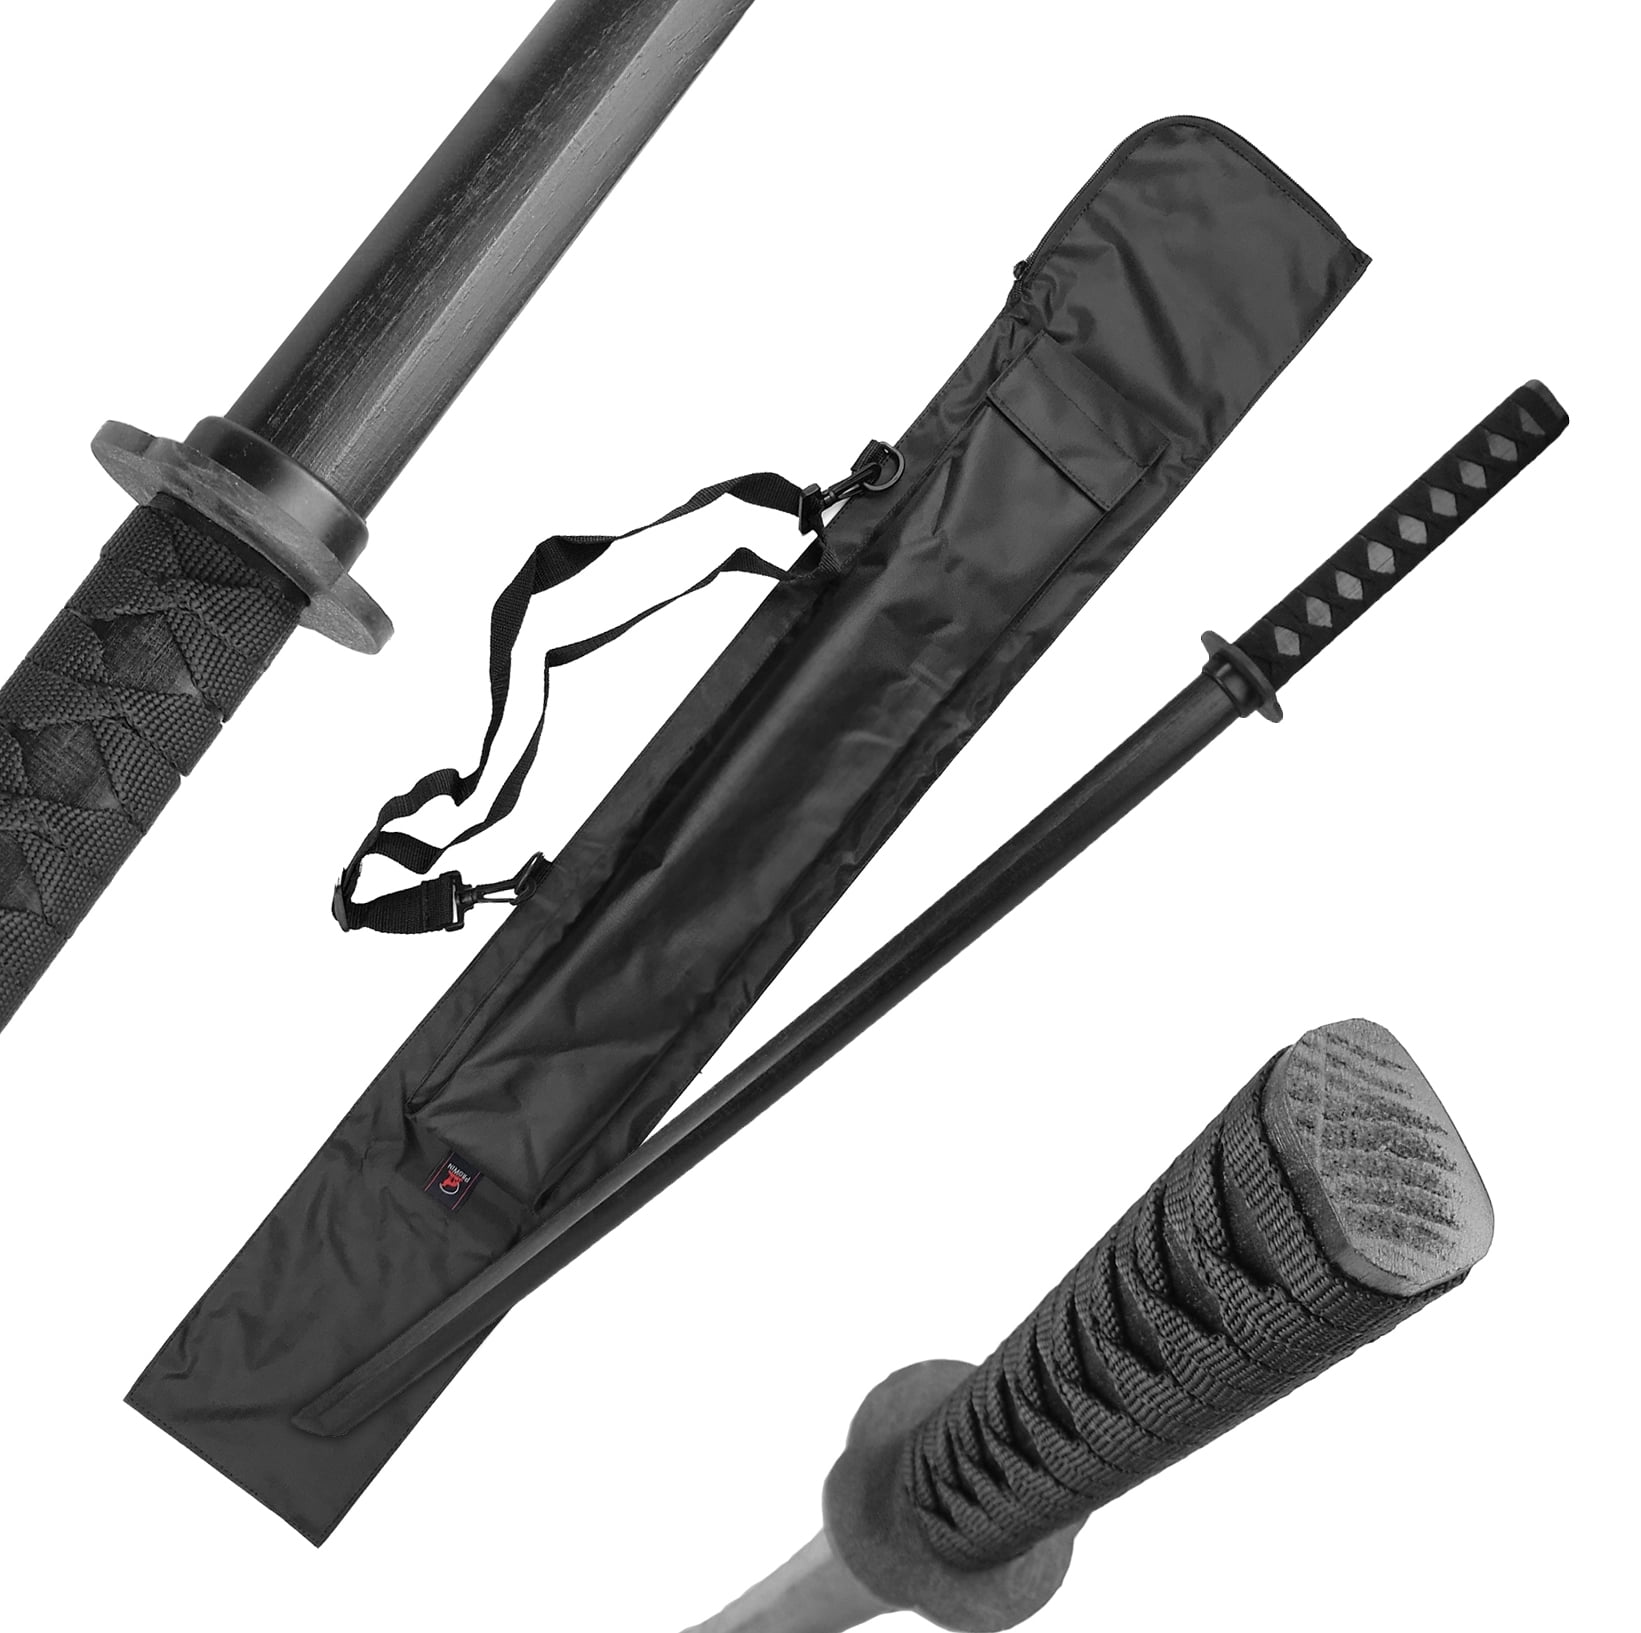 Polypropylene Rubber Samurai Training Katana Swords Larp Cosplay Black Handle 